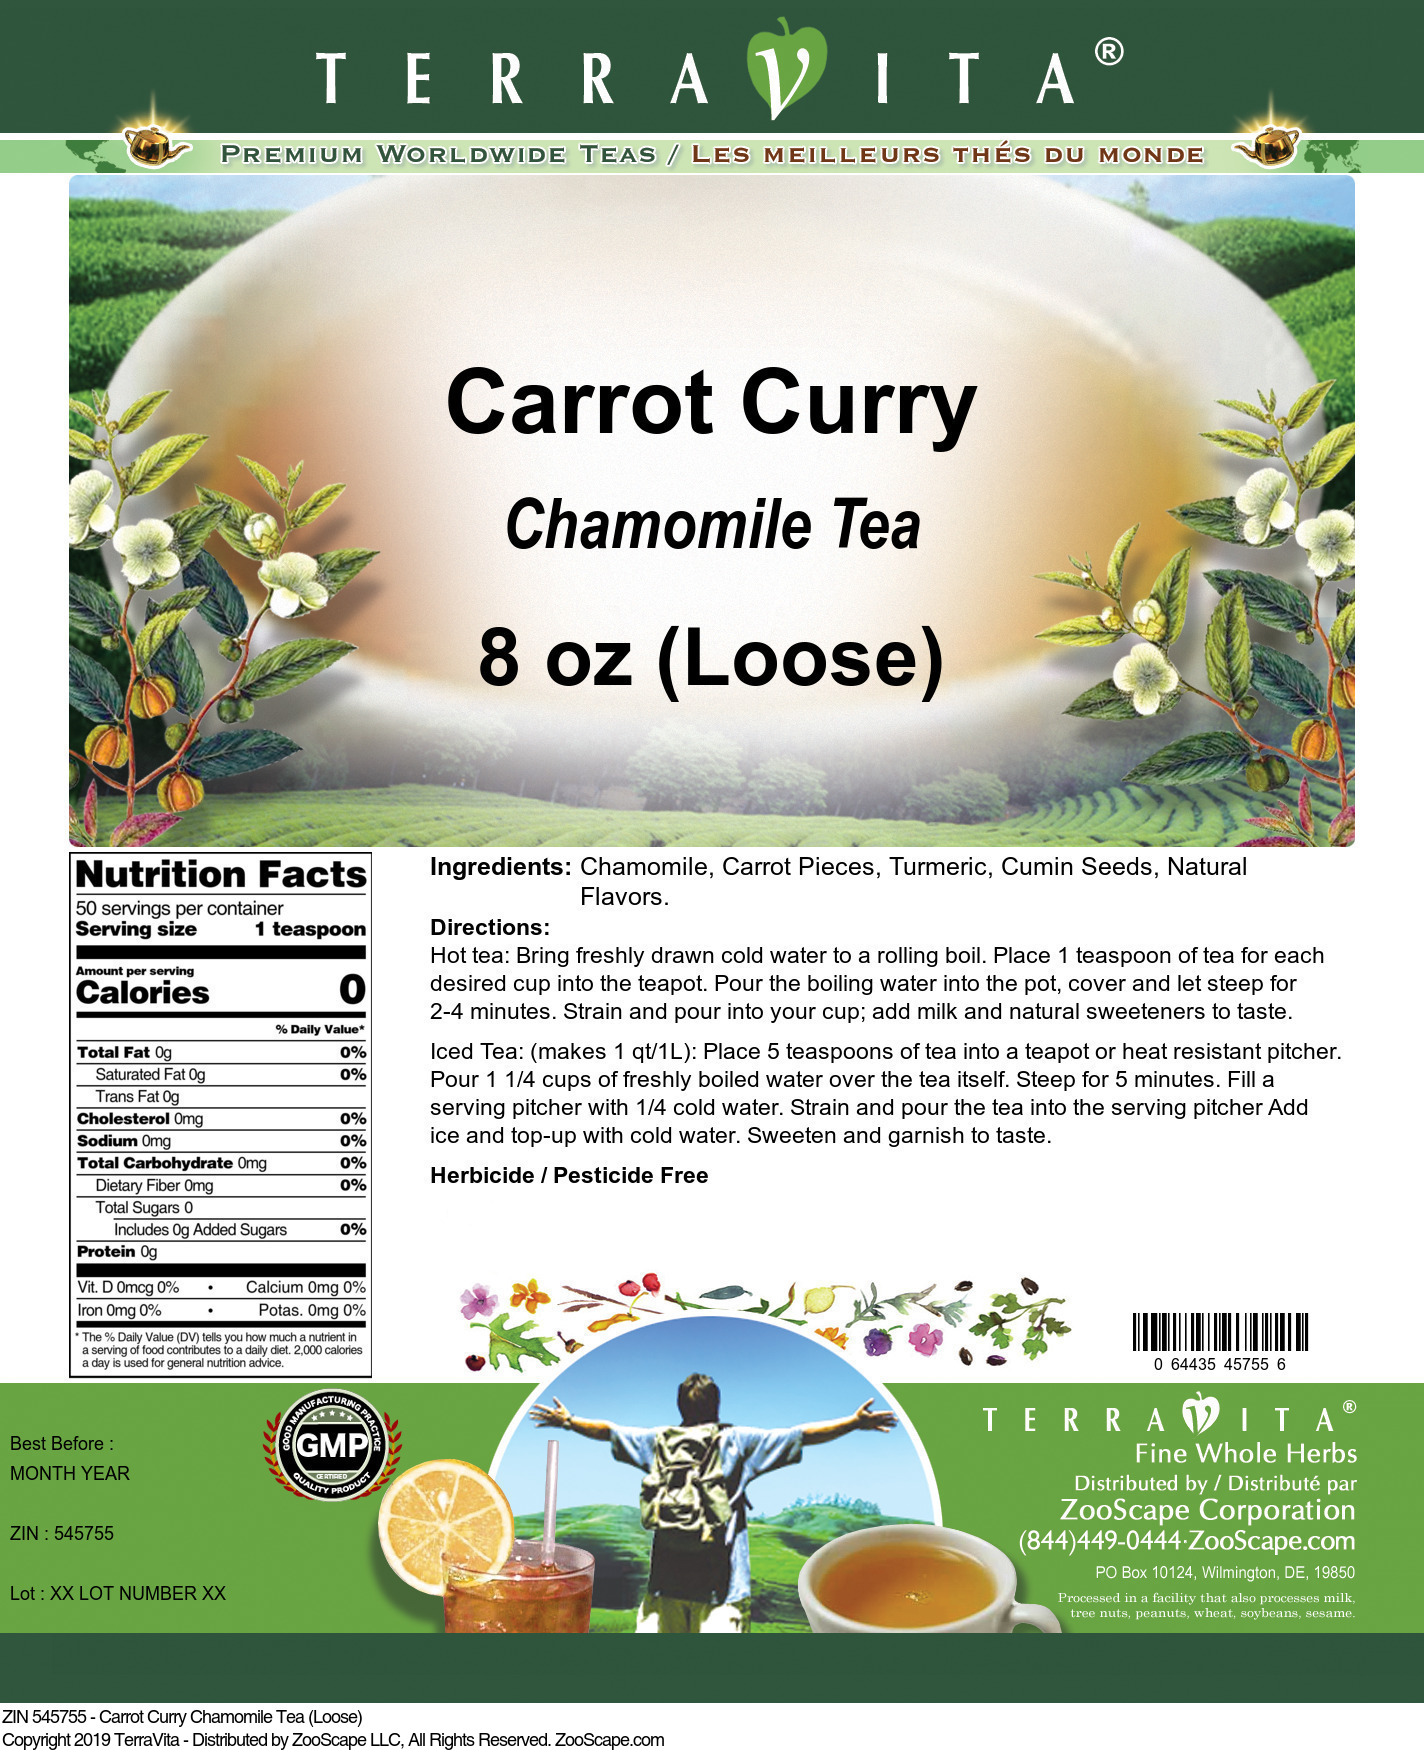 Carrot Curry Chamomile Tea (Loose) - Label